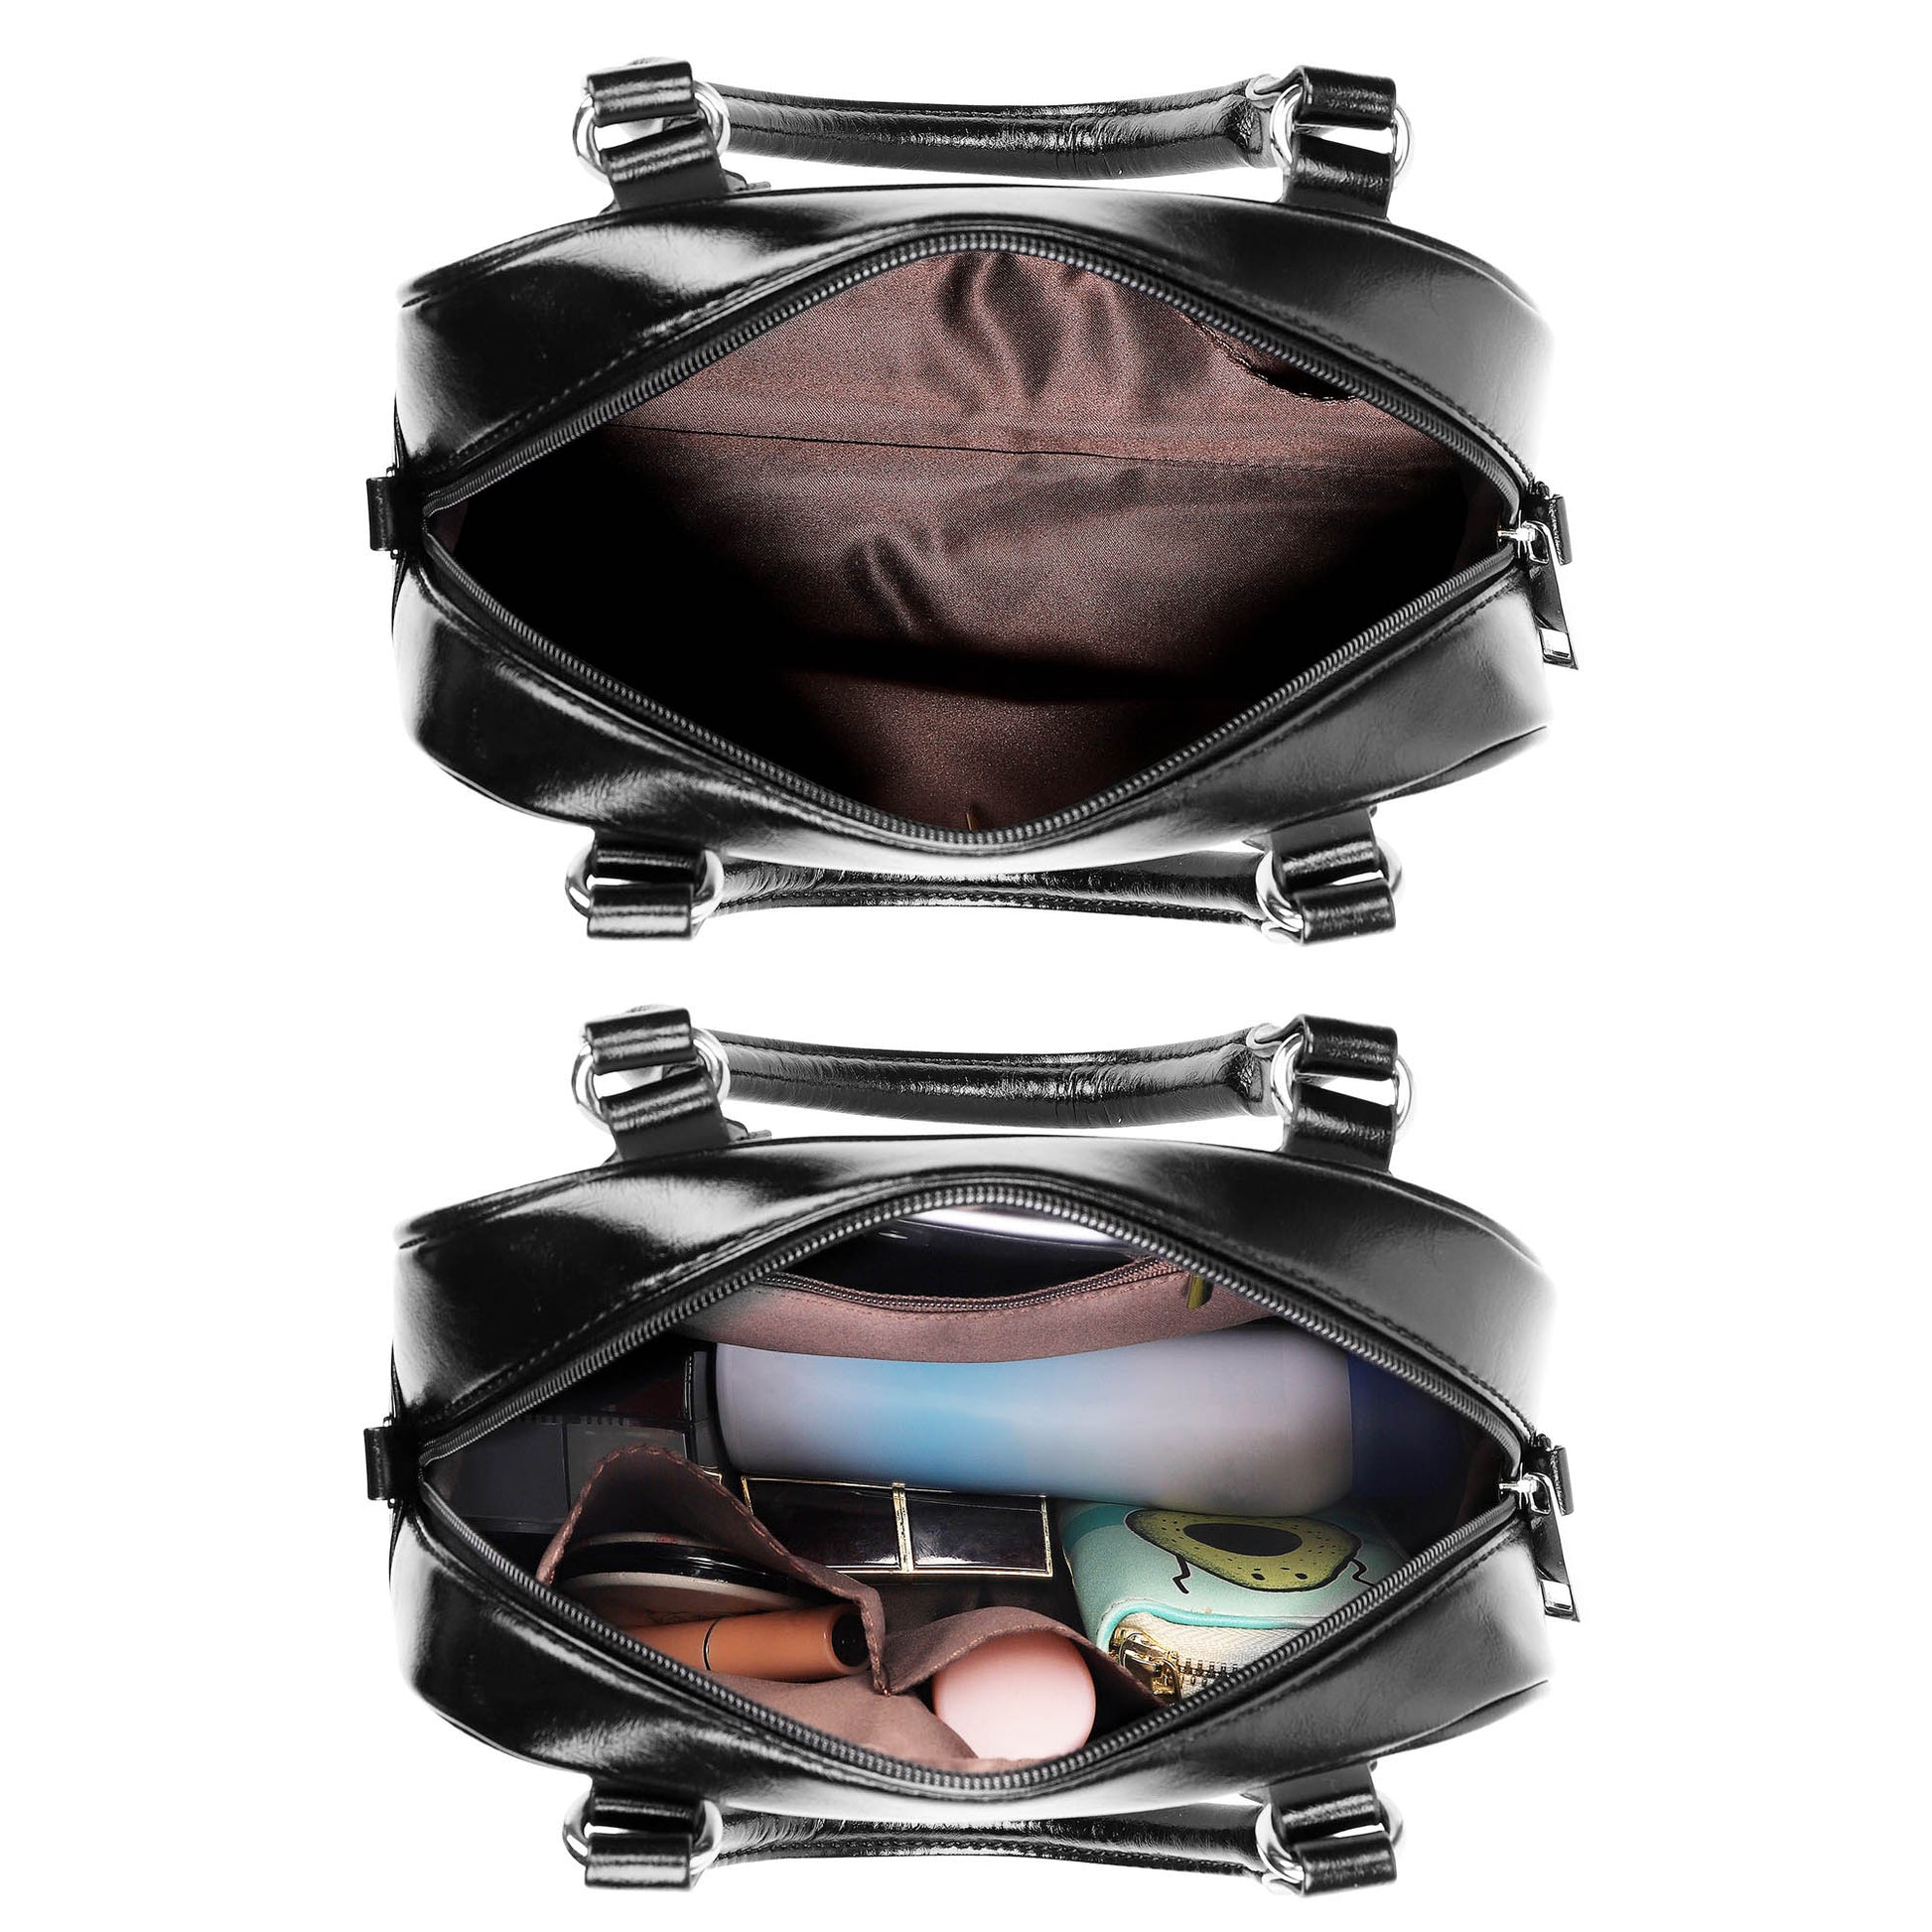 MacKay Weathered Tartan Shoulder Handbags with Family Crest - Tartanvibesclothing